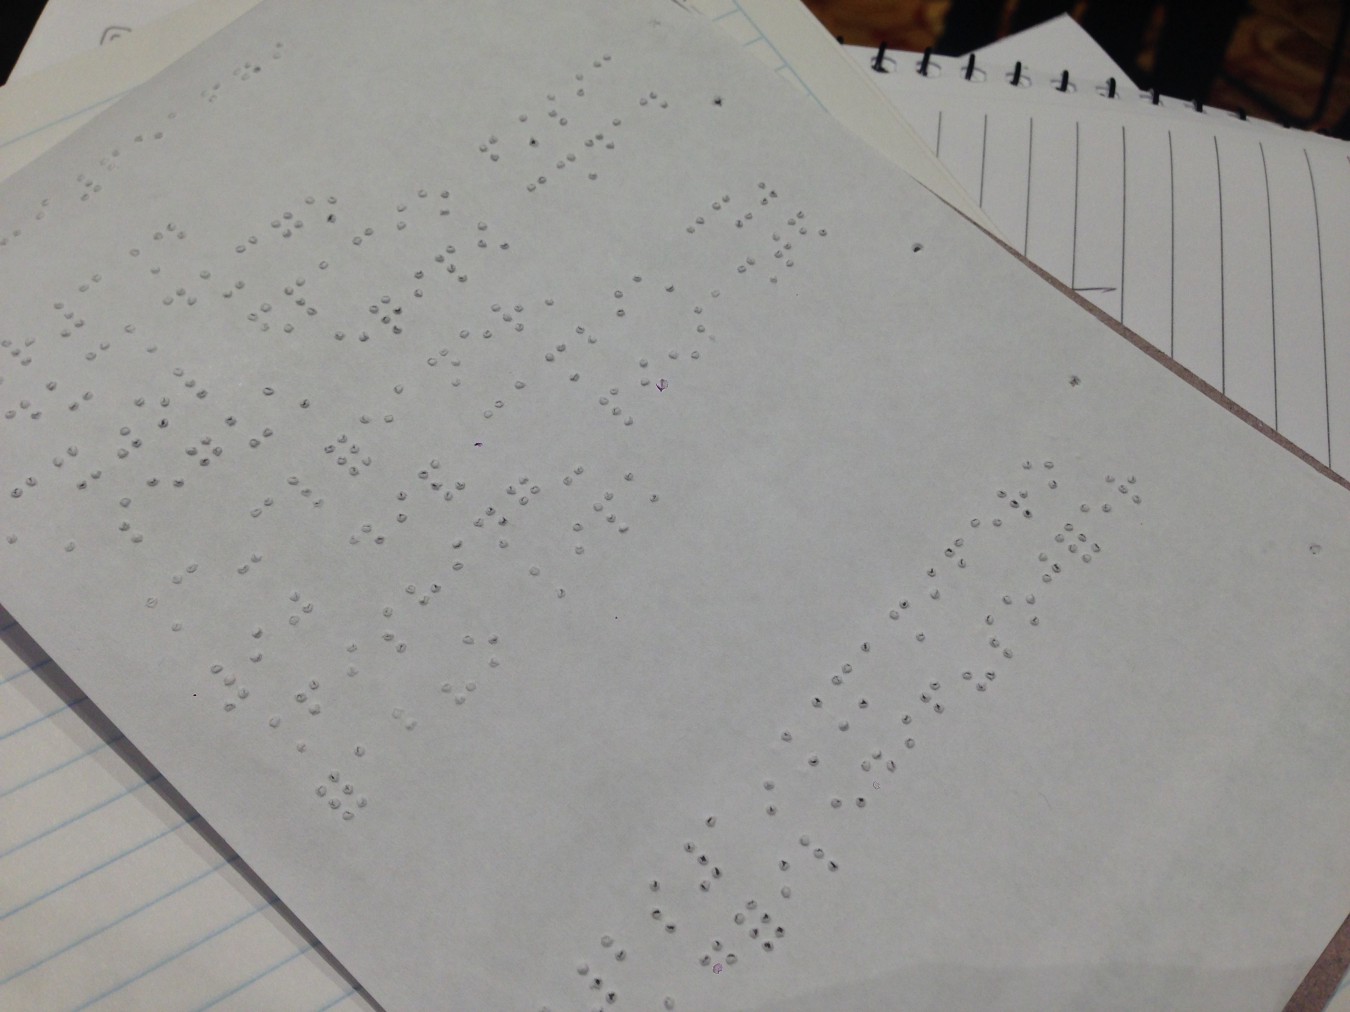 Security workshop notes taken in braille. Credit: Mariel Garcia M